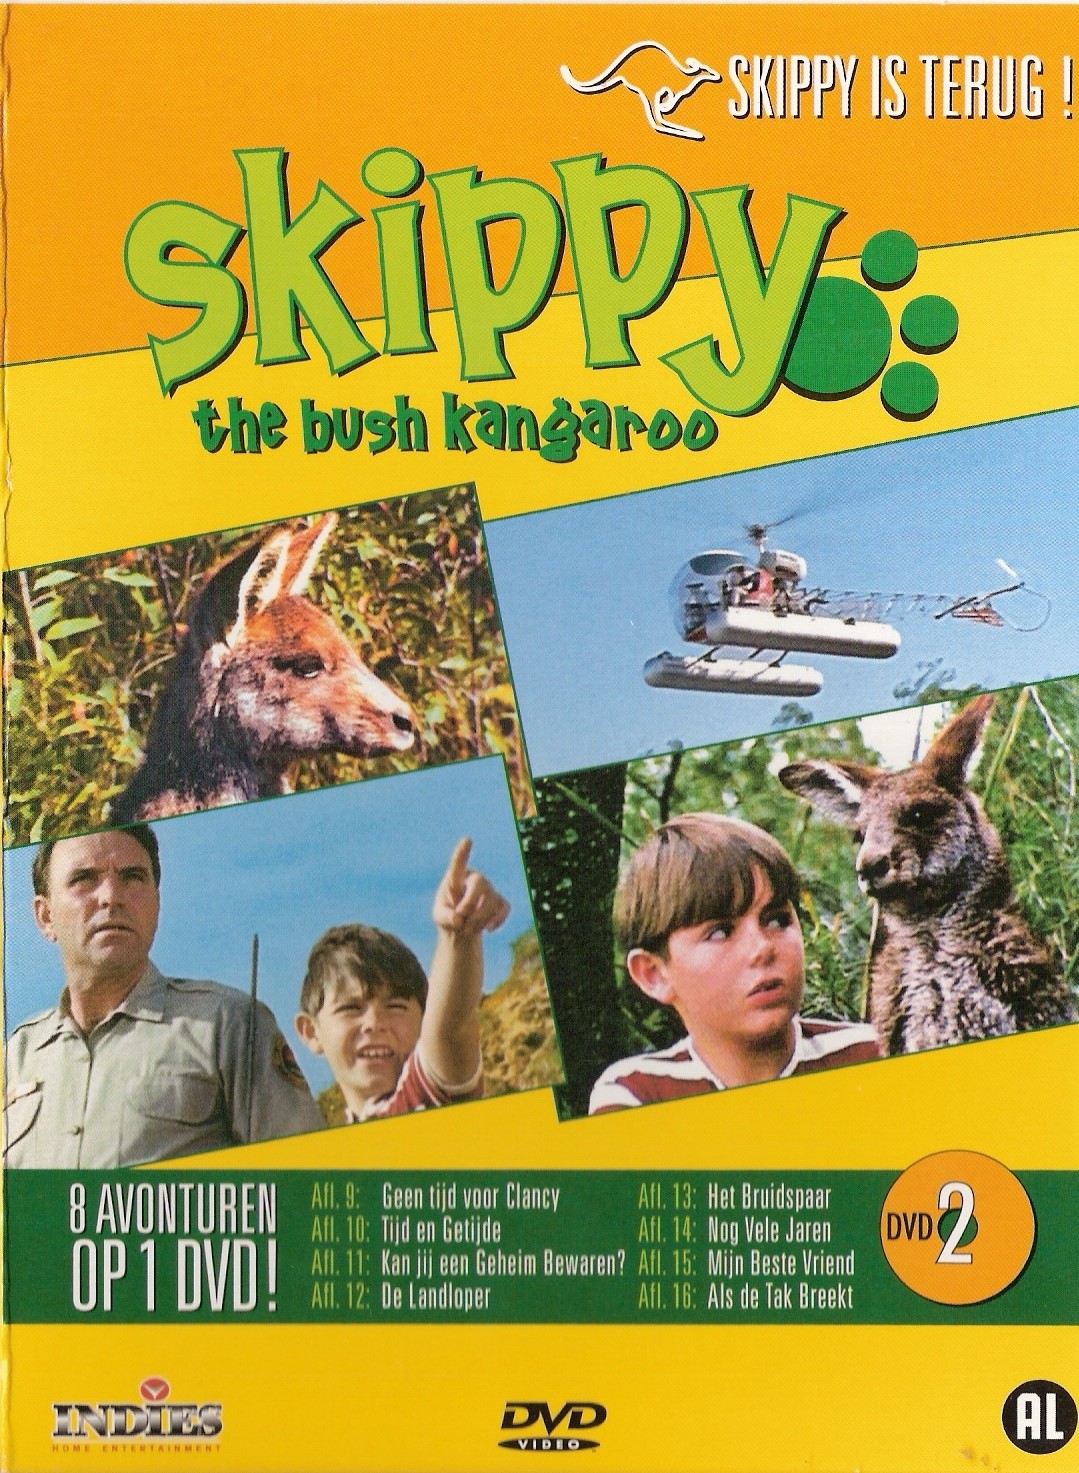 Skippy the Bushkangaroo (1966) (DVD 2 van 5)